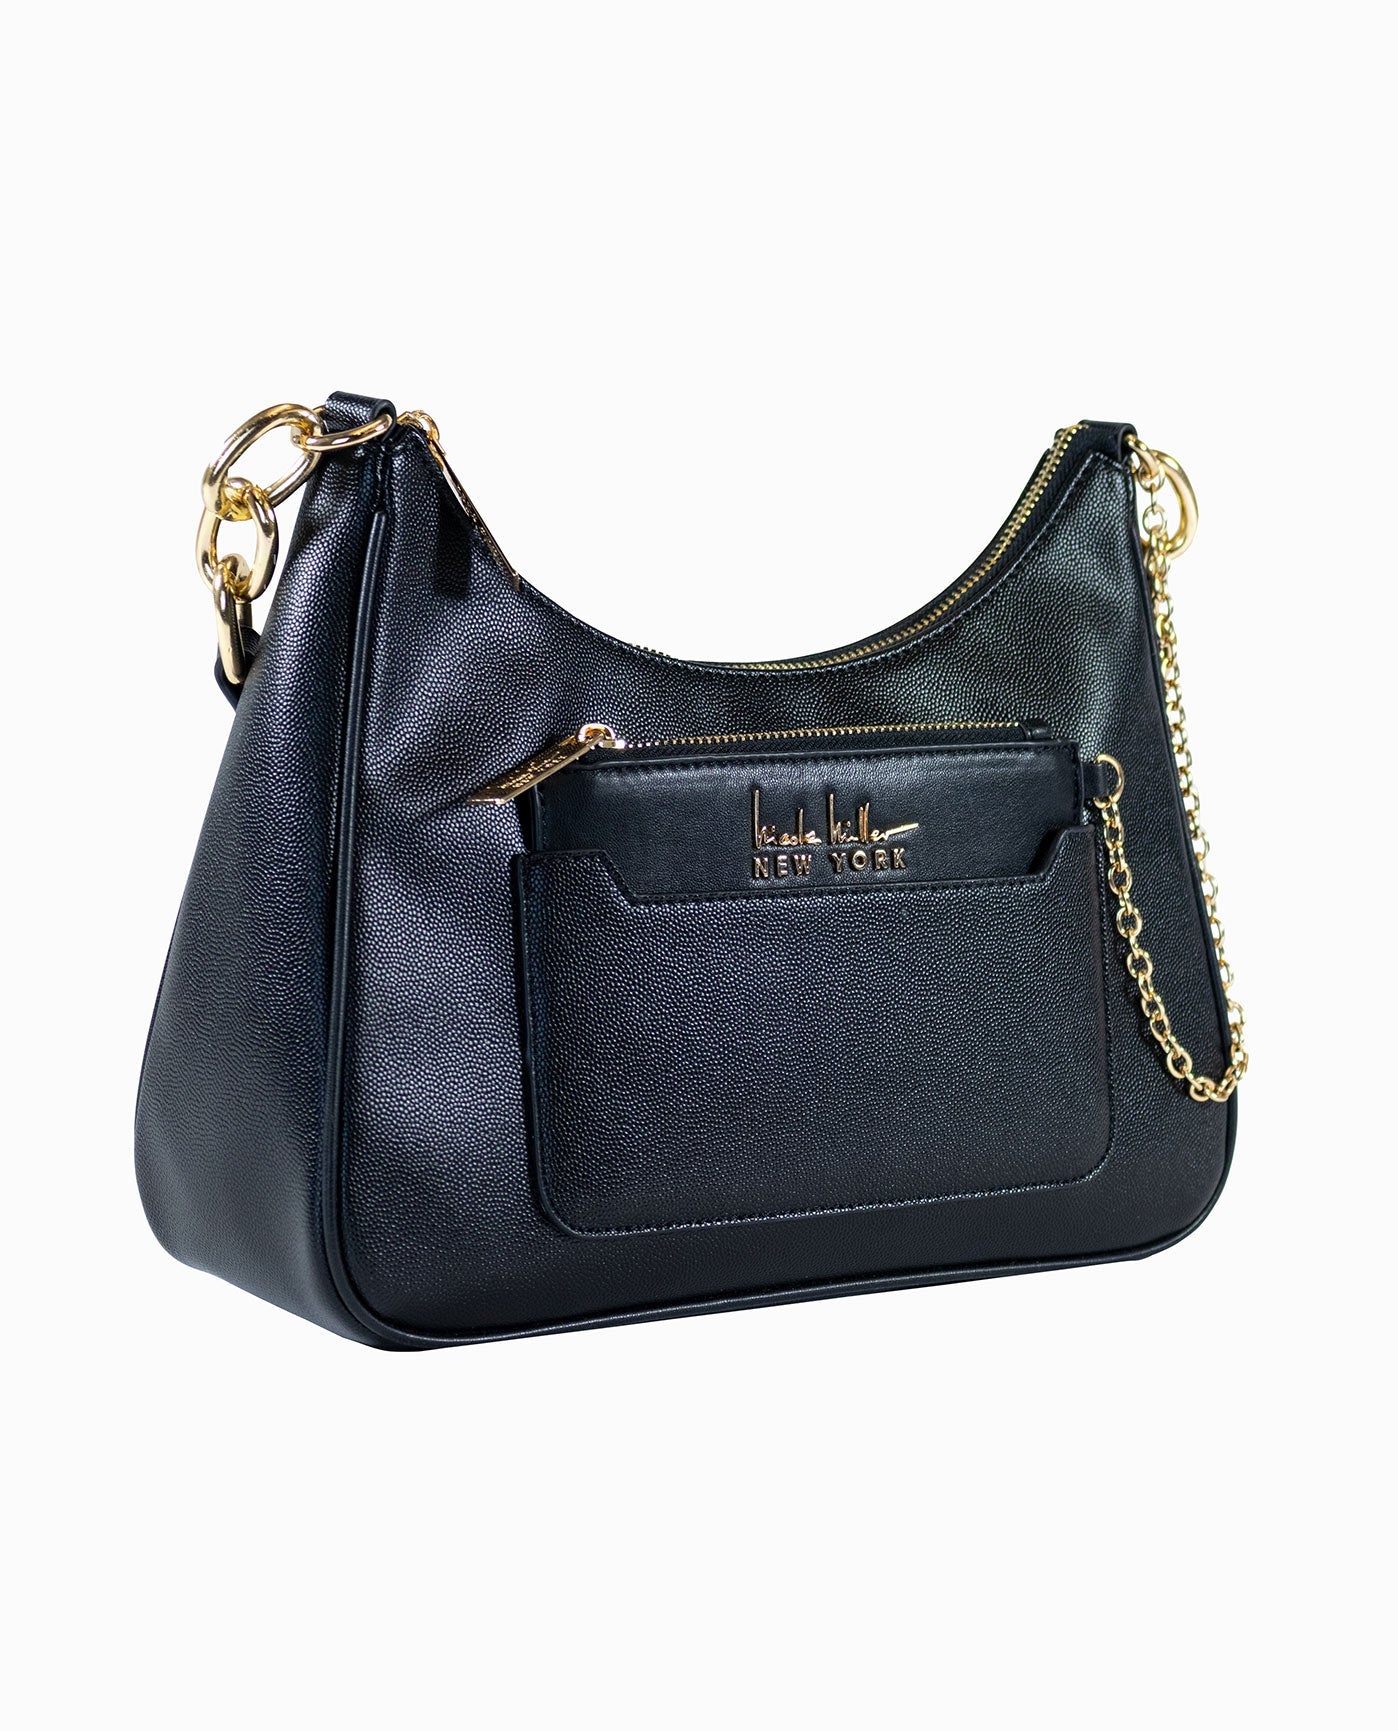 Nicole Miller purse | Purses, Nicole miller, Embossed bag